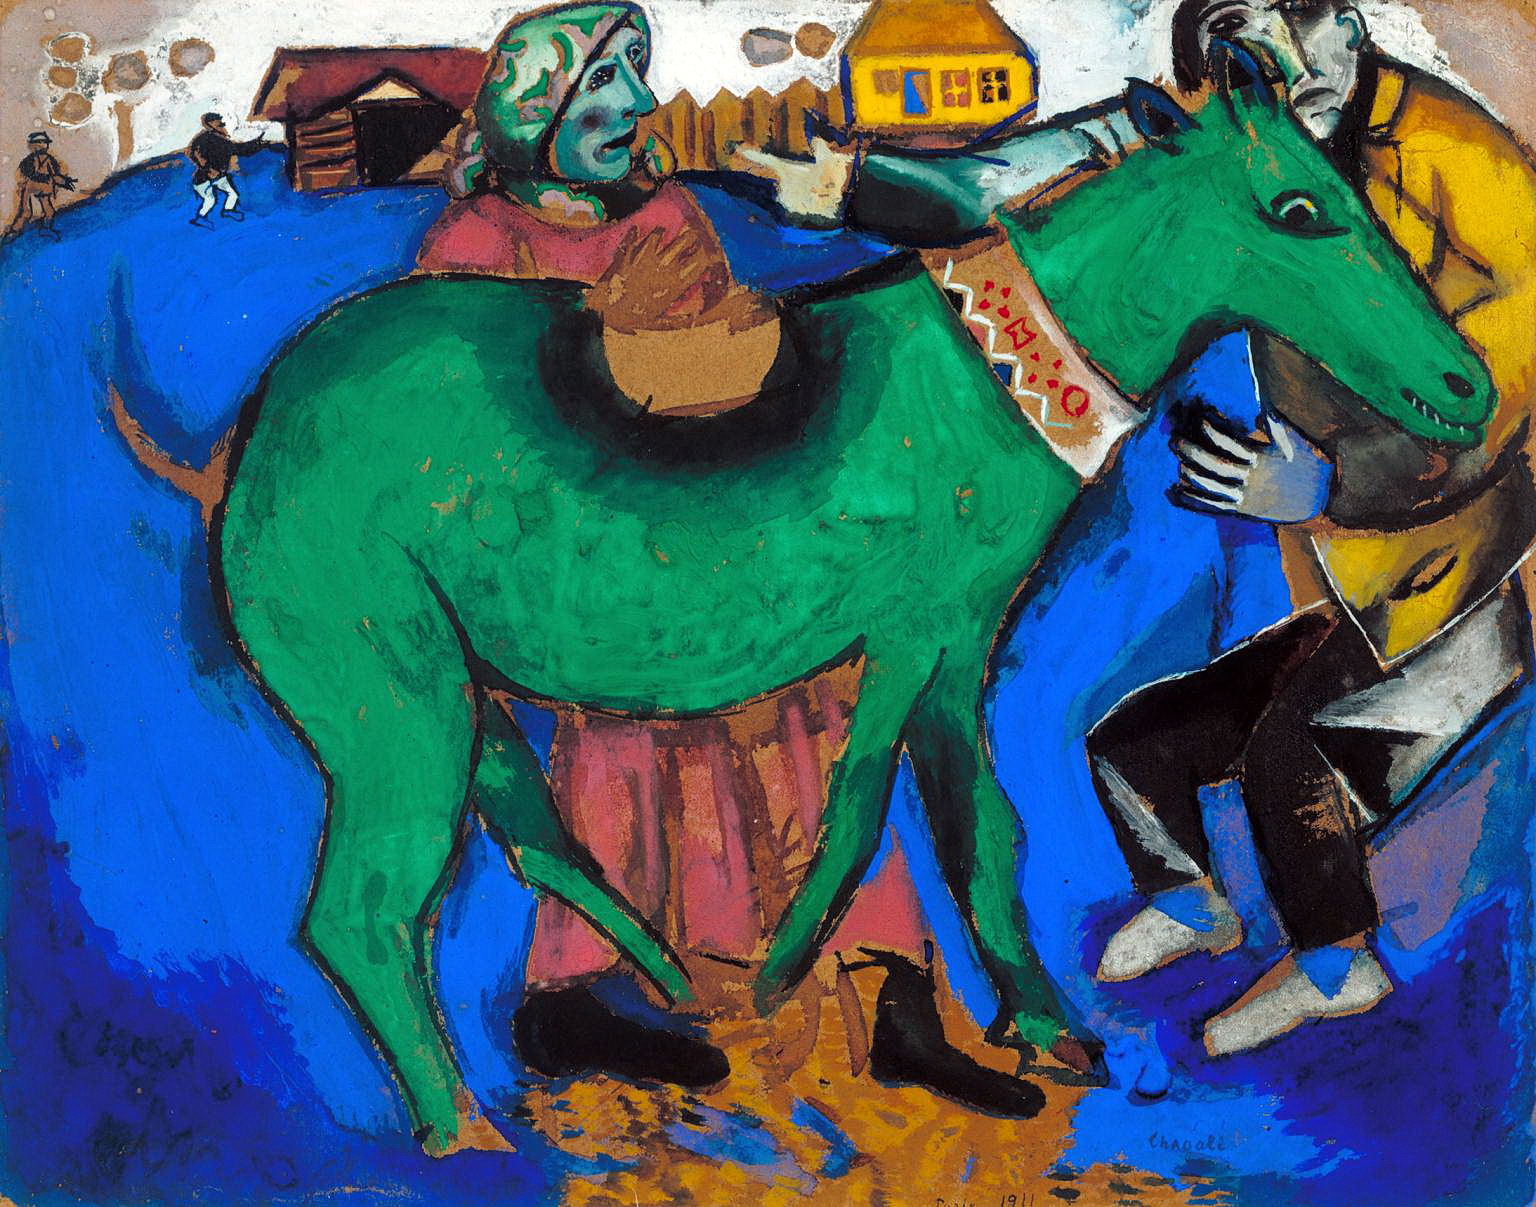 Marc+Chagall-1887-1985 (303).jpg